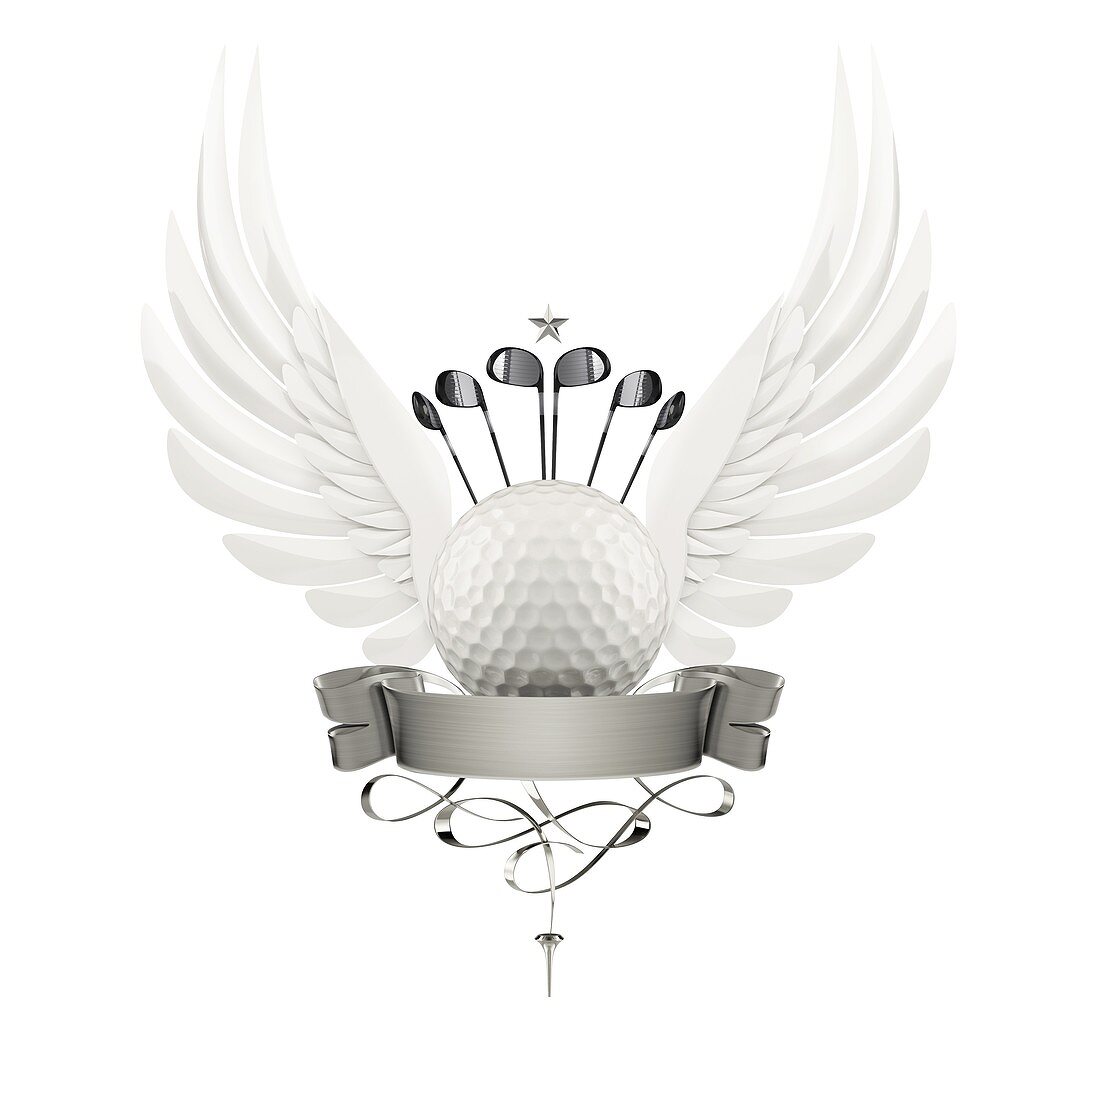 Golf logo, illustration